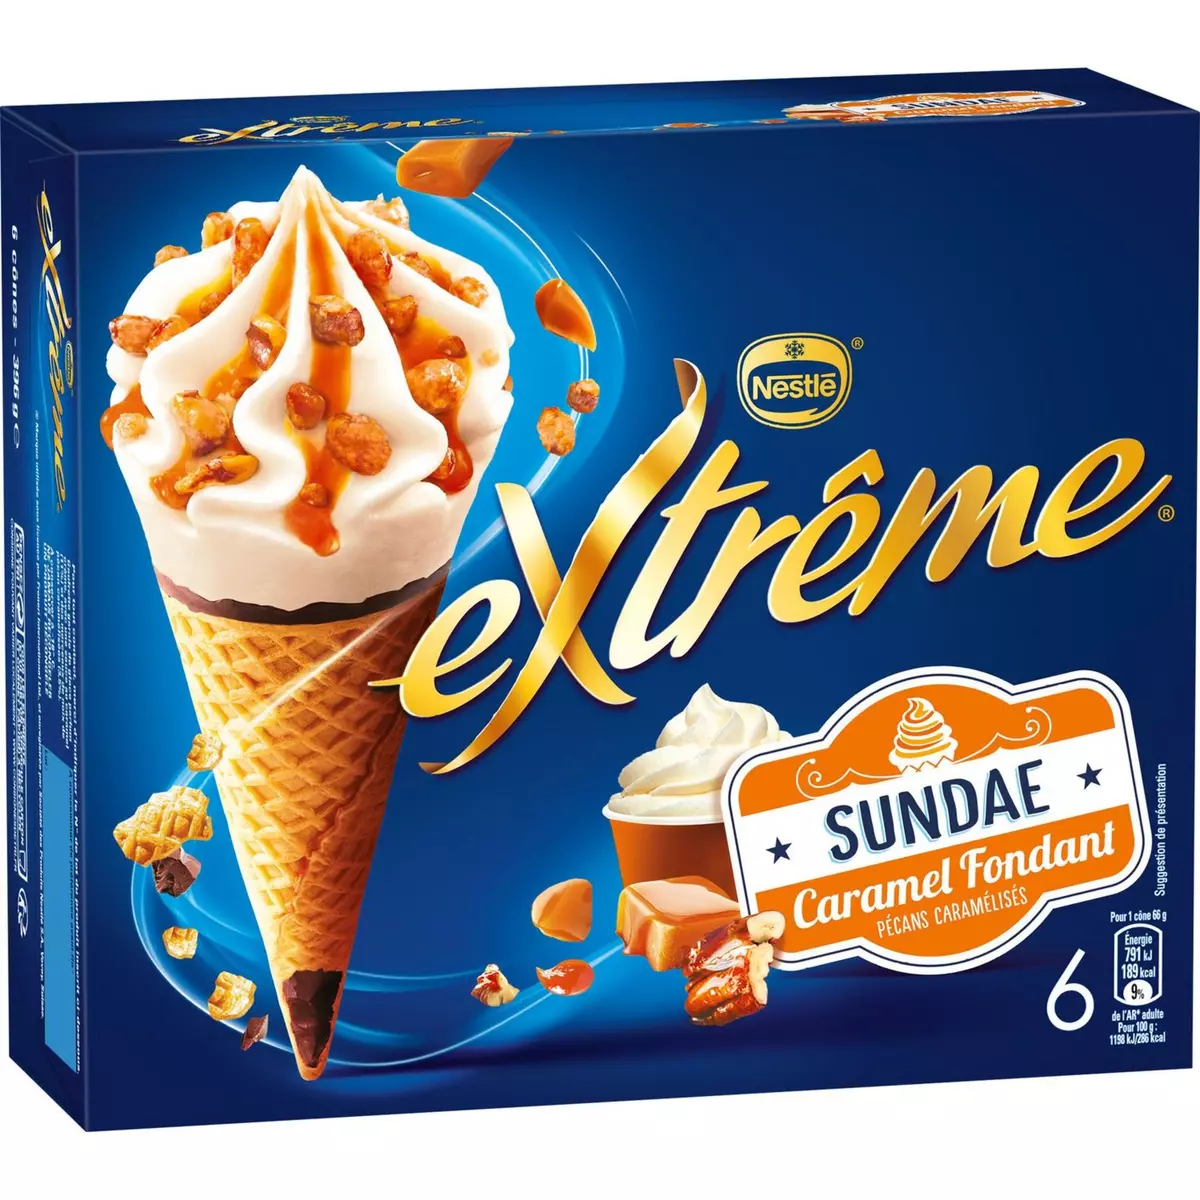 EXTREME Cône glacé sundae caramel fondant 6 pièces 396g